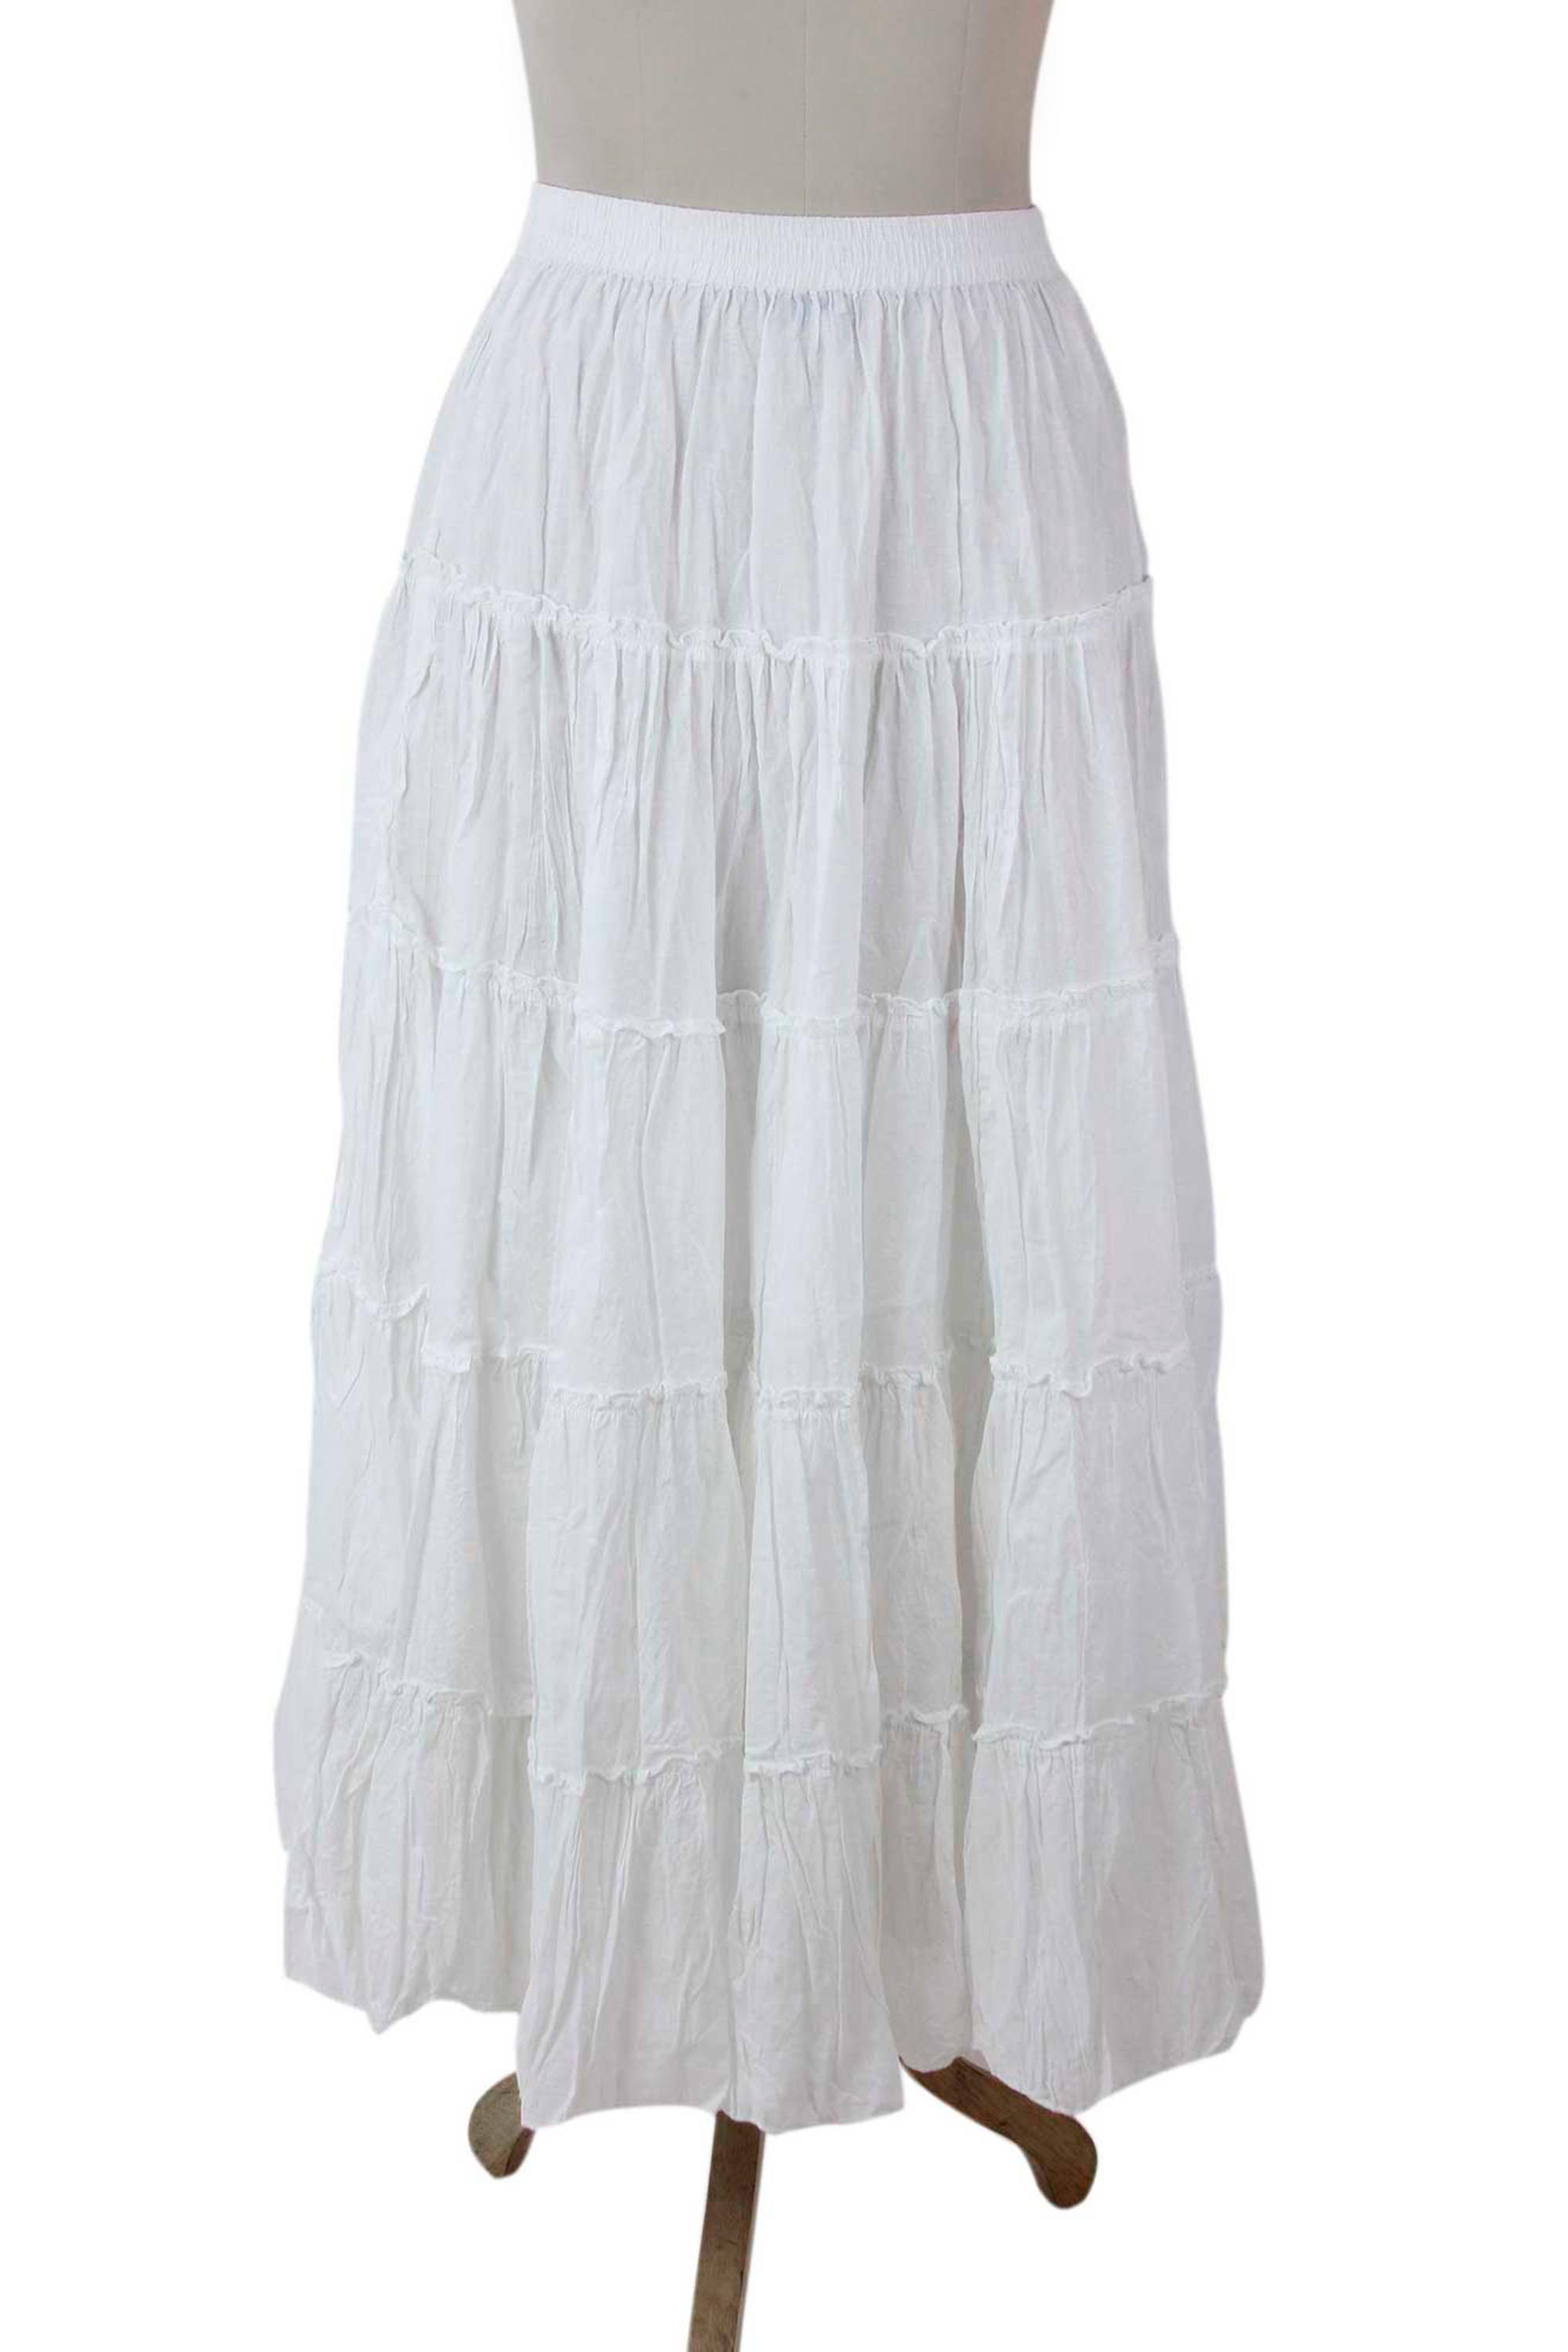 Unlined Semi-Sheer Tiered White Cotton Skirt - Frilly White | NOVICA